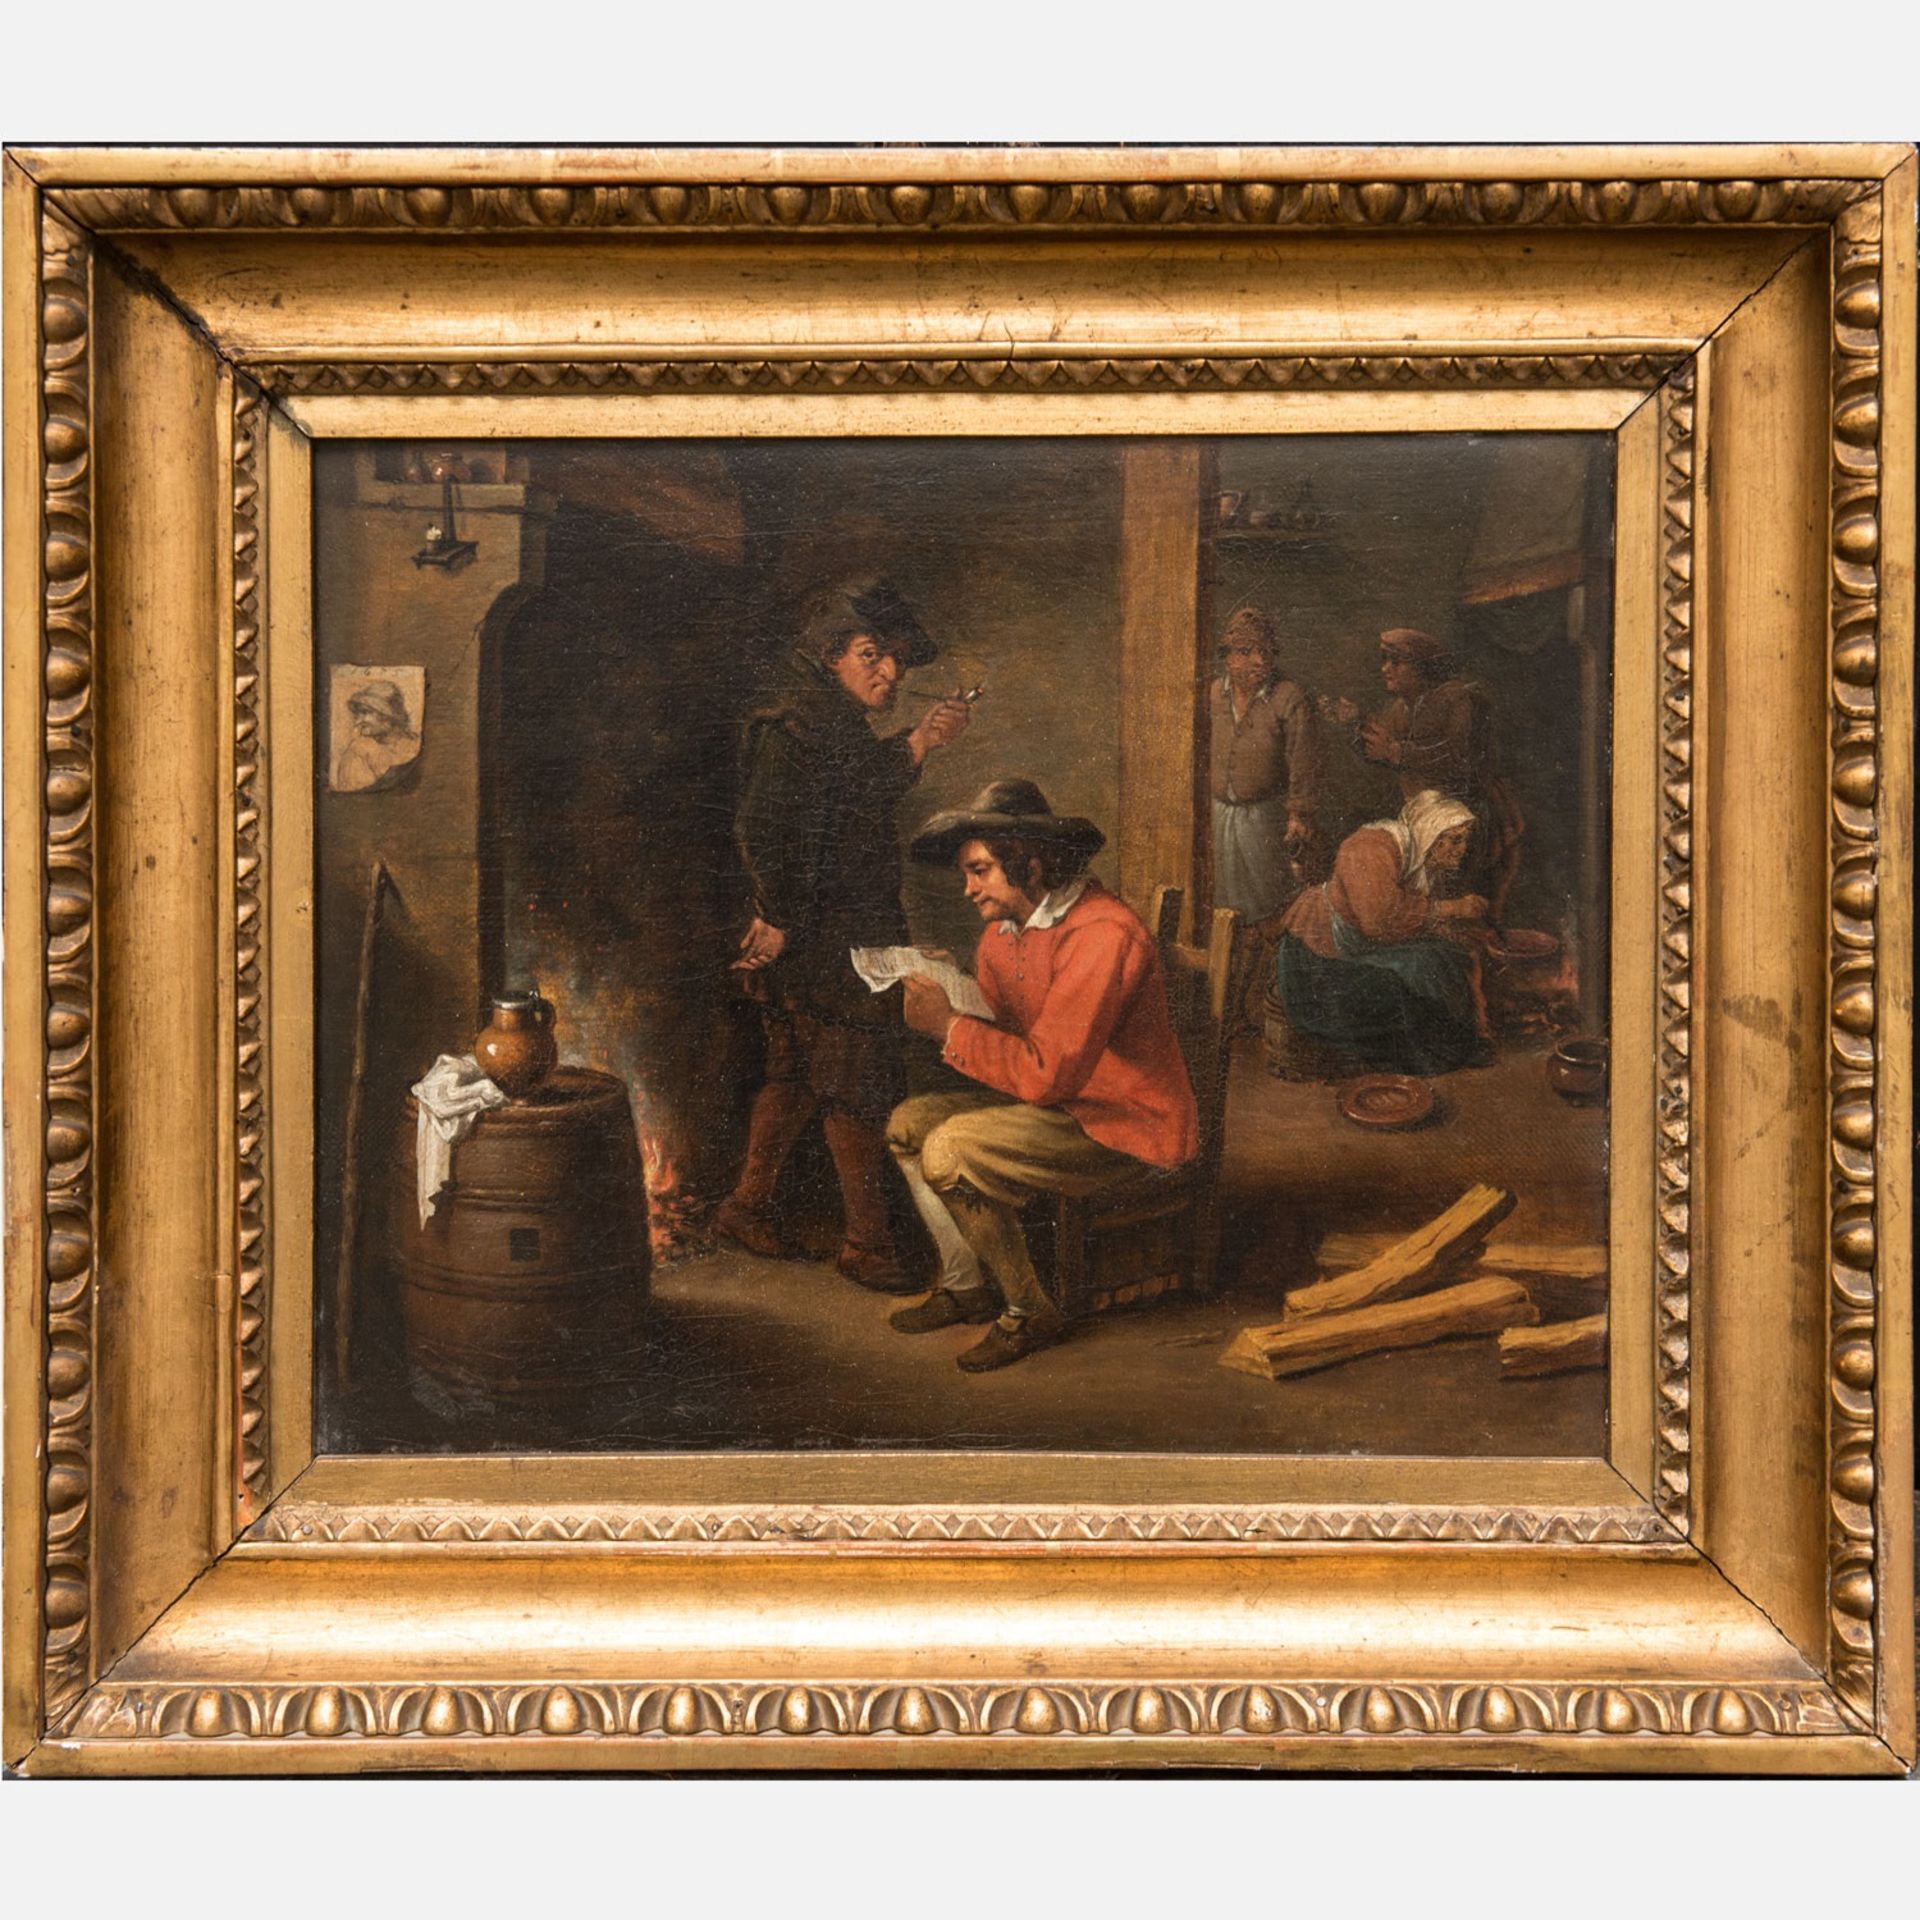 David Teniers the Younger (1610 – 1690) – School